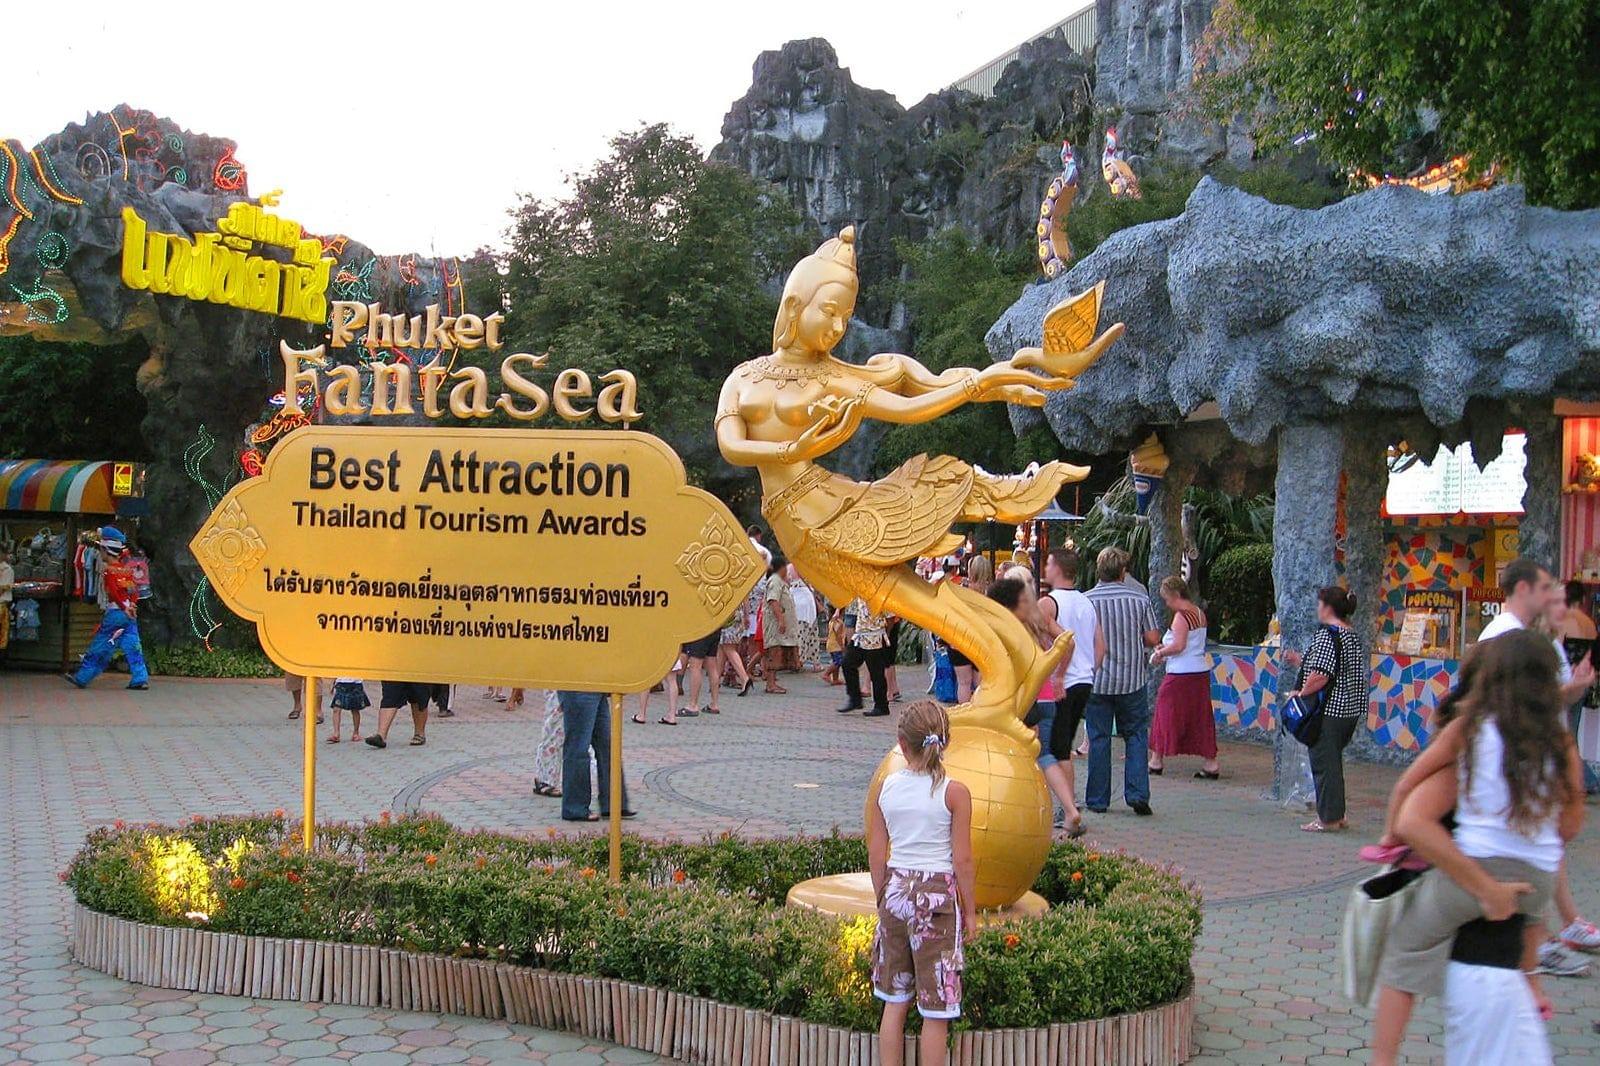 Phuket Fantasea